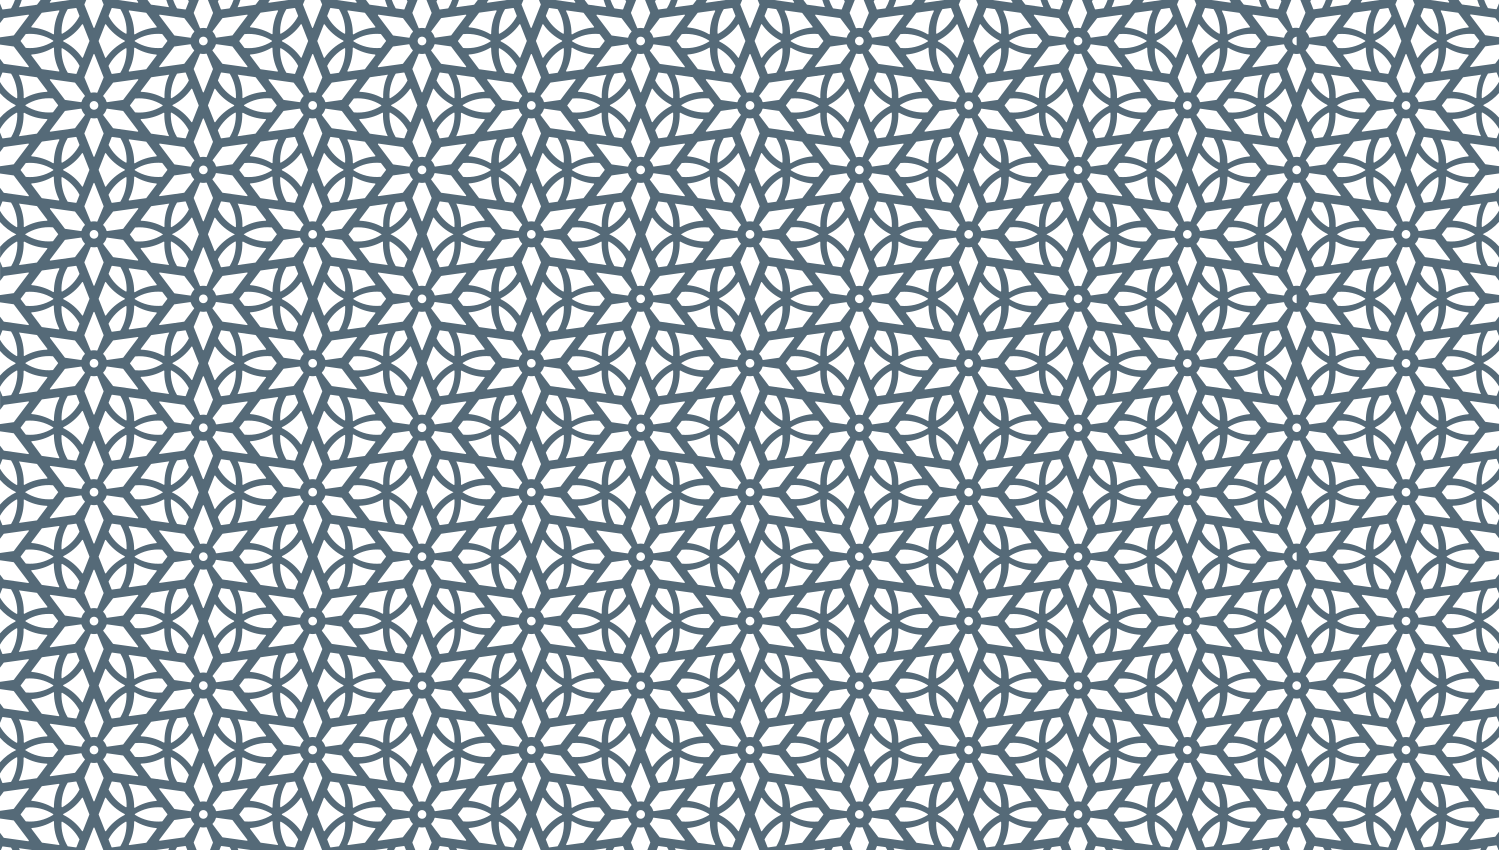 Parasoleil™ Boulder Flower© pattern displayed with a blue color overlay